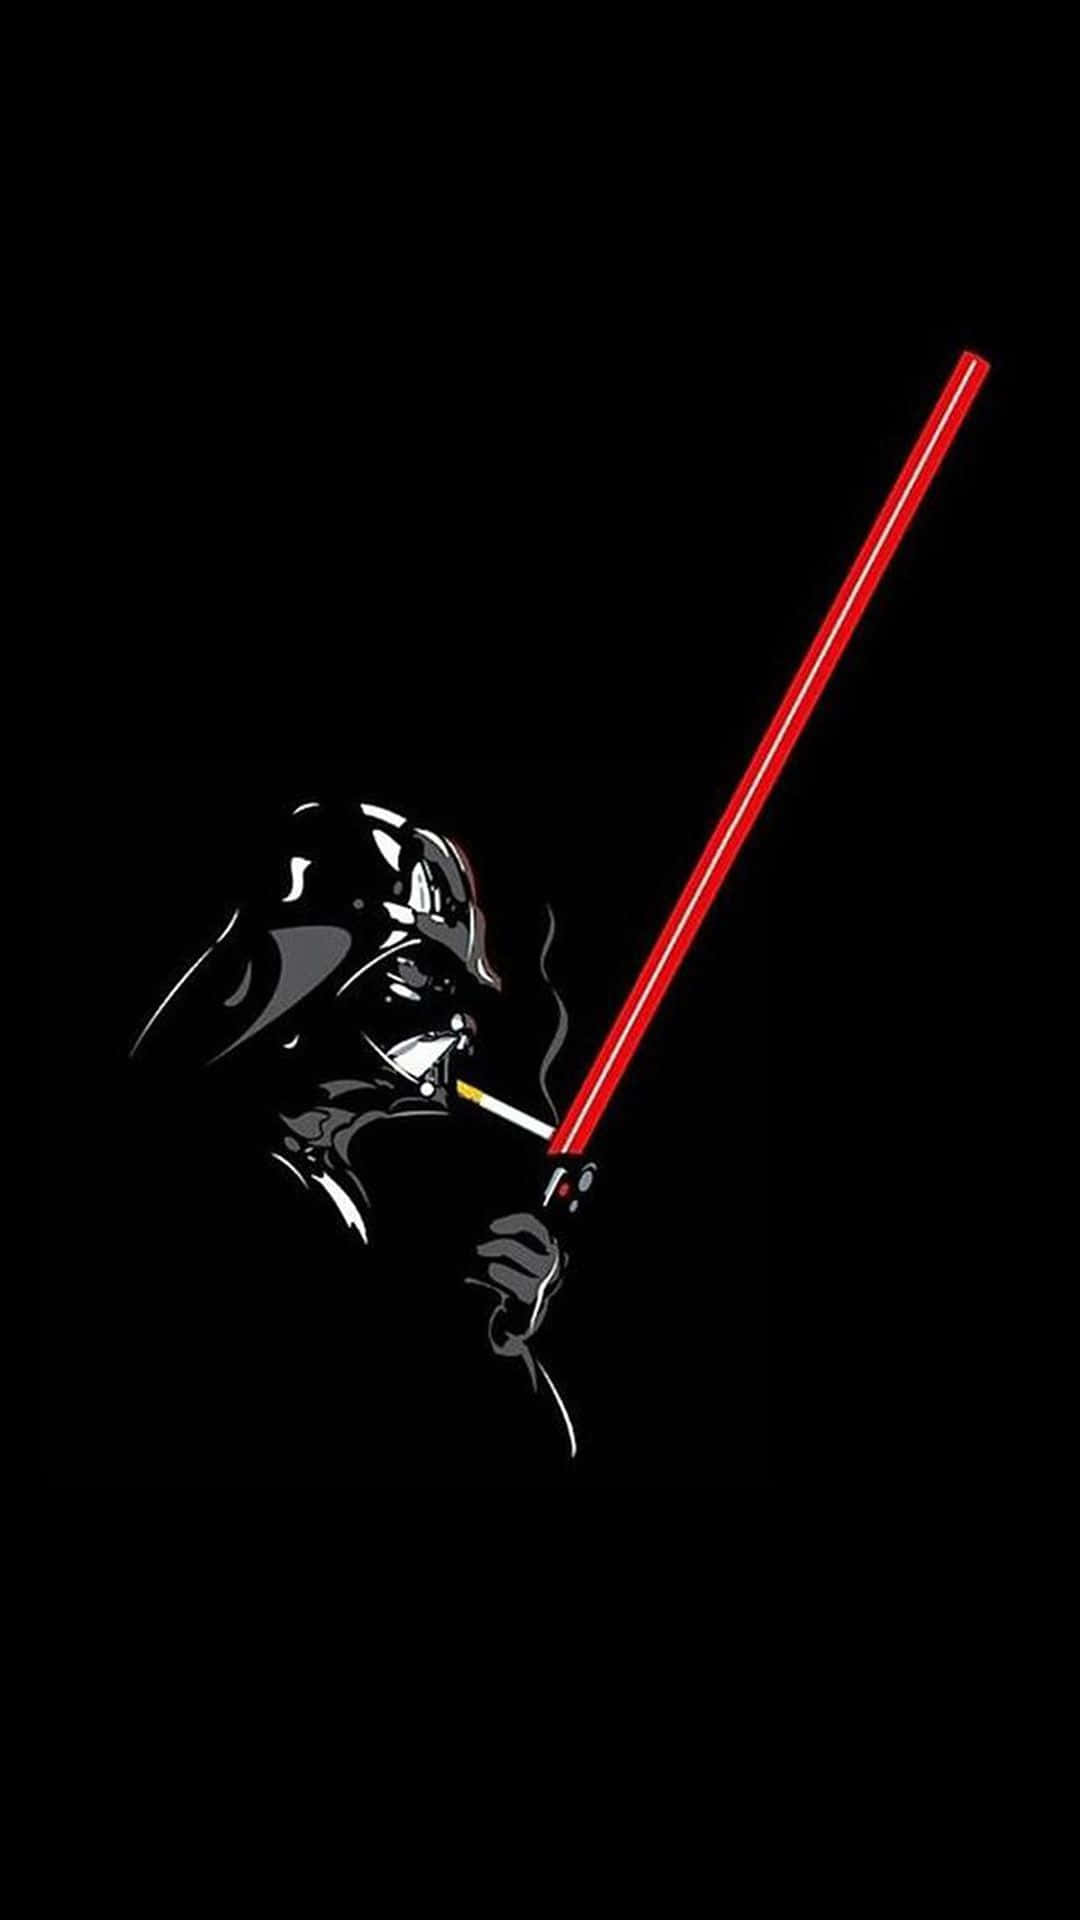 Darth Vader With A Red Light Saber Wallpaper